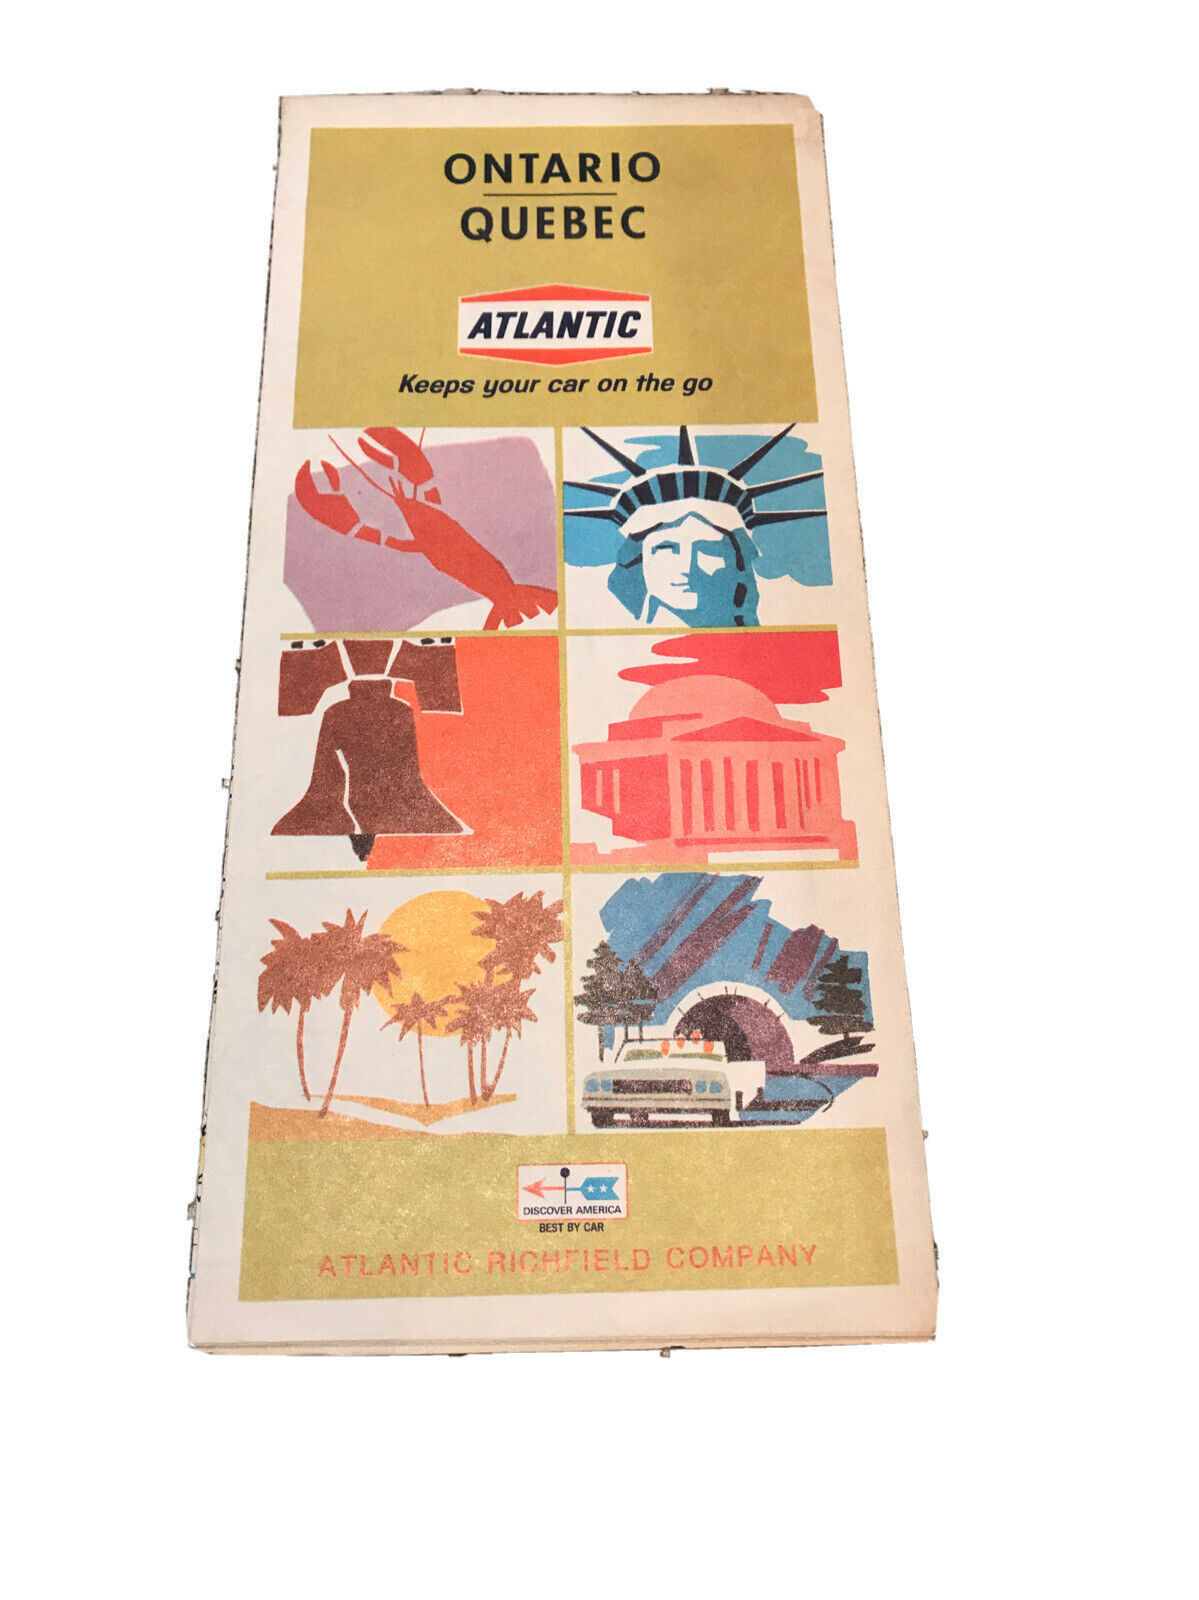 Vintage Atlantic Imperial Quebec Ontario Montreal Highway Road Travel Map 1968